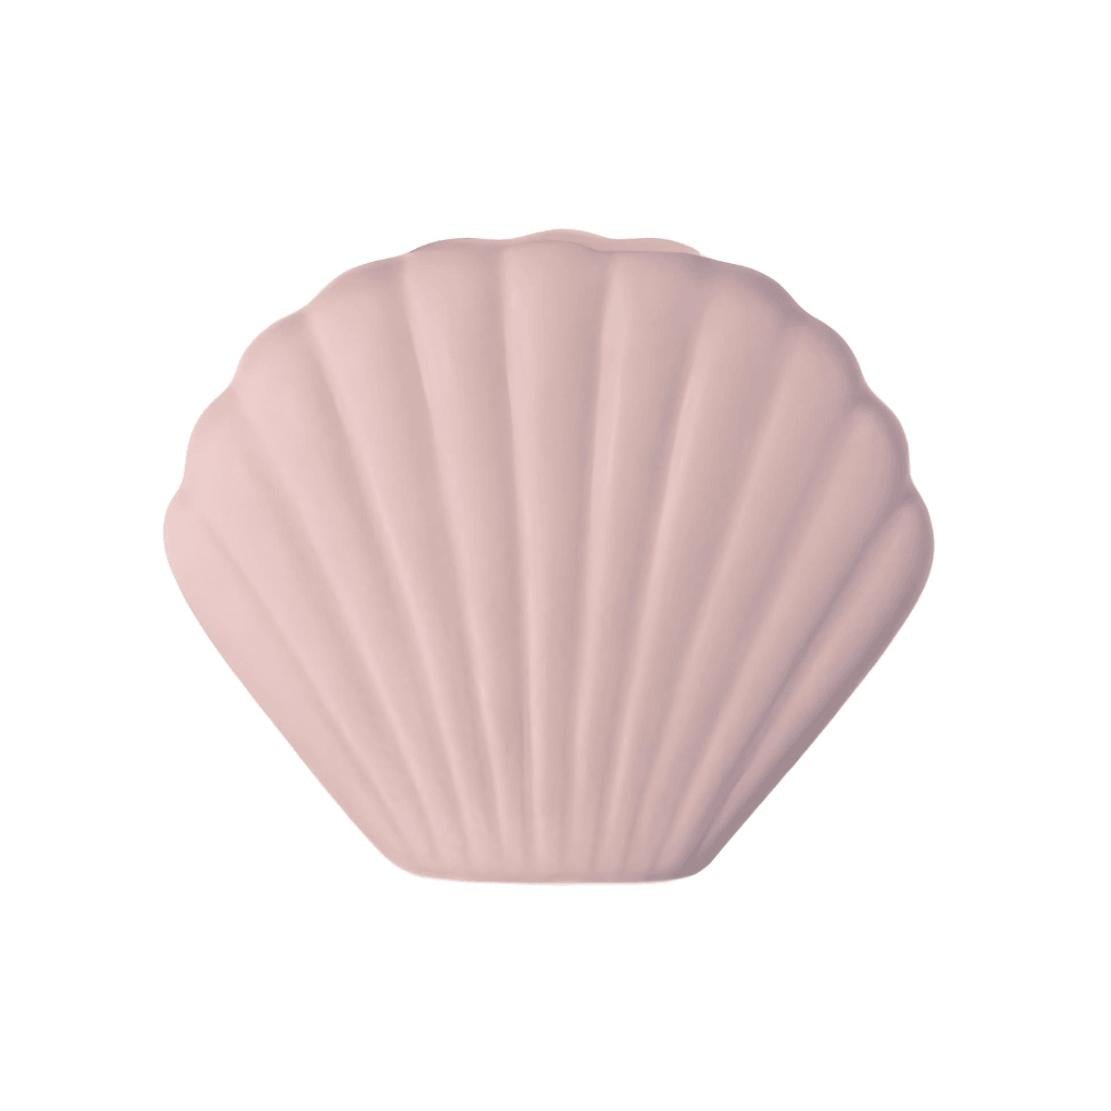 Pastel pink ceramic shell vase